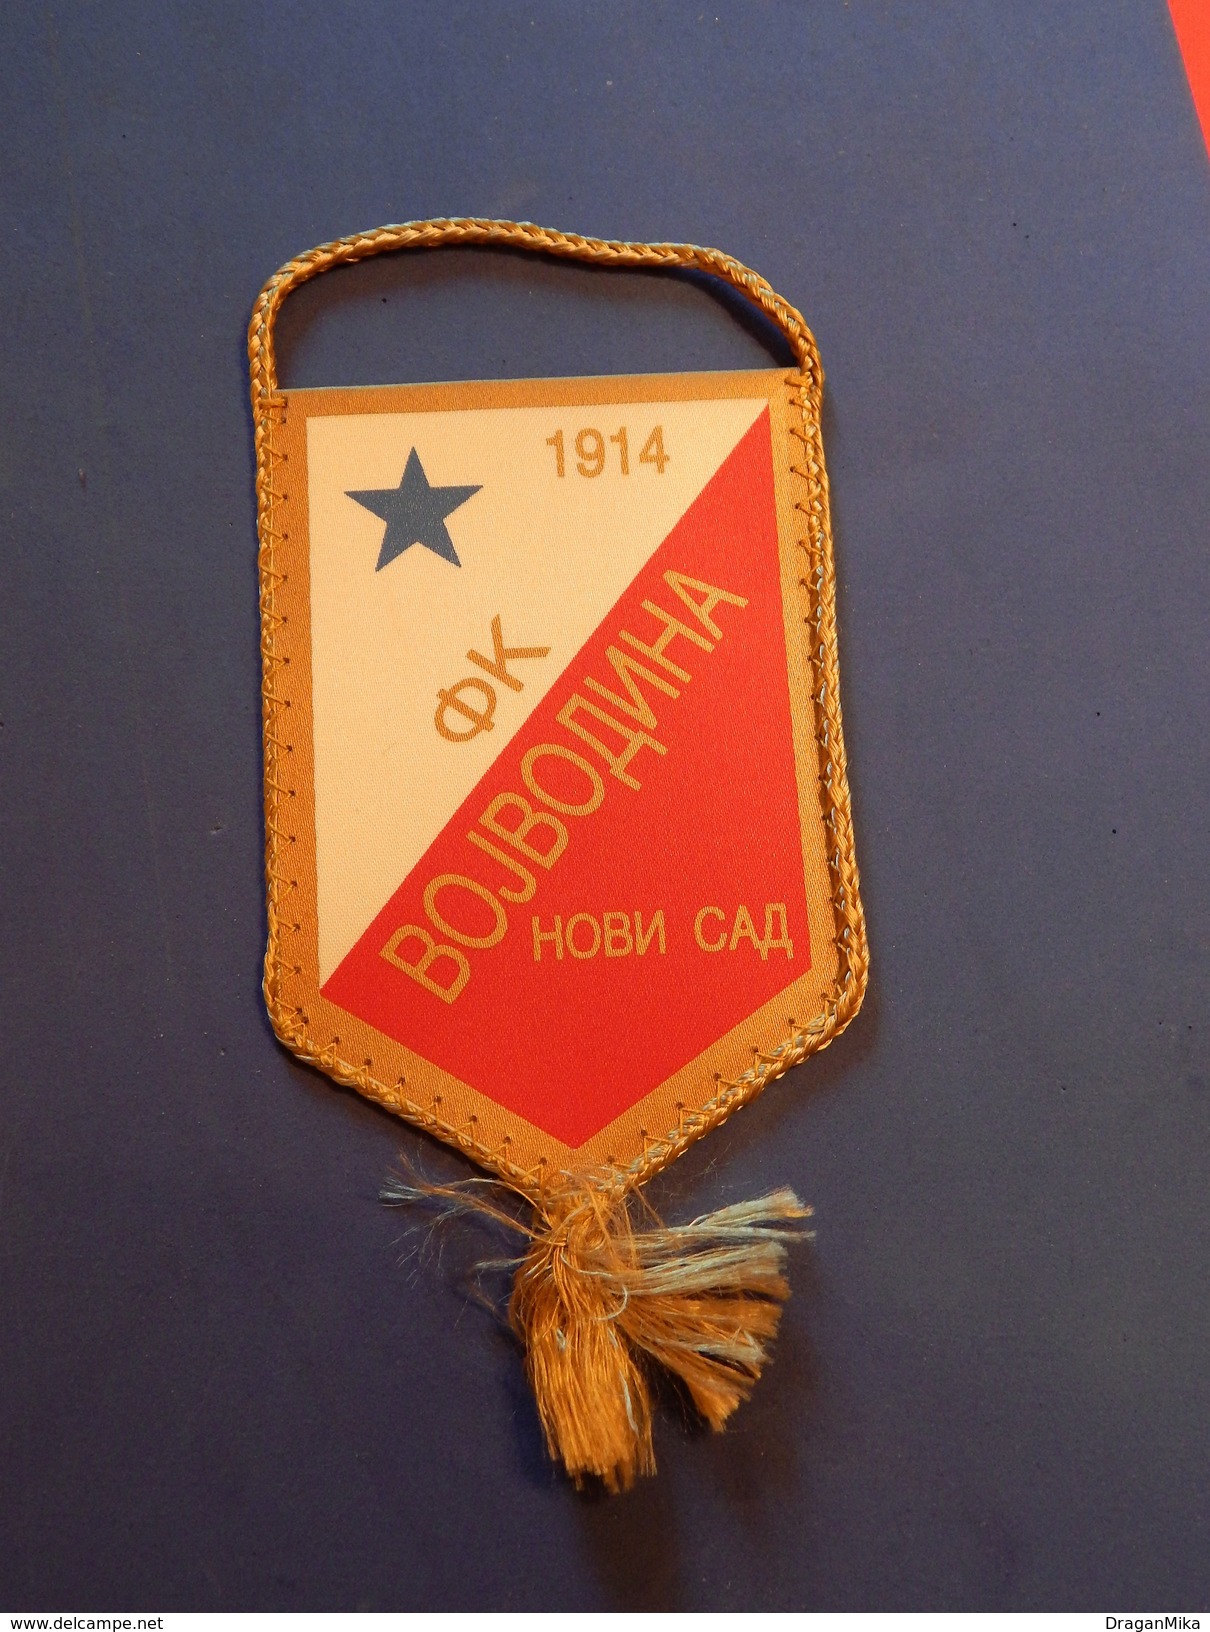 The Old Flag Football Club Vojvodina, Novi Sad, Yugoslavia, 2 - Habillement, Souvenirs & Autres